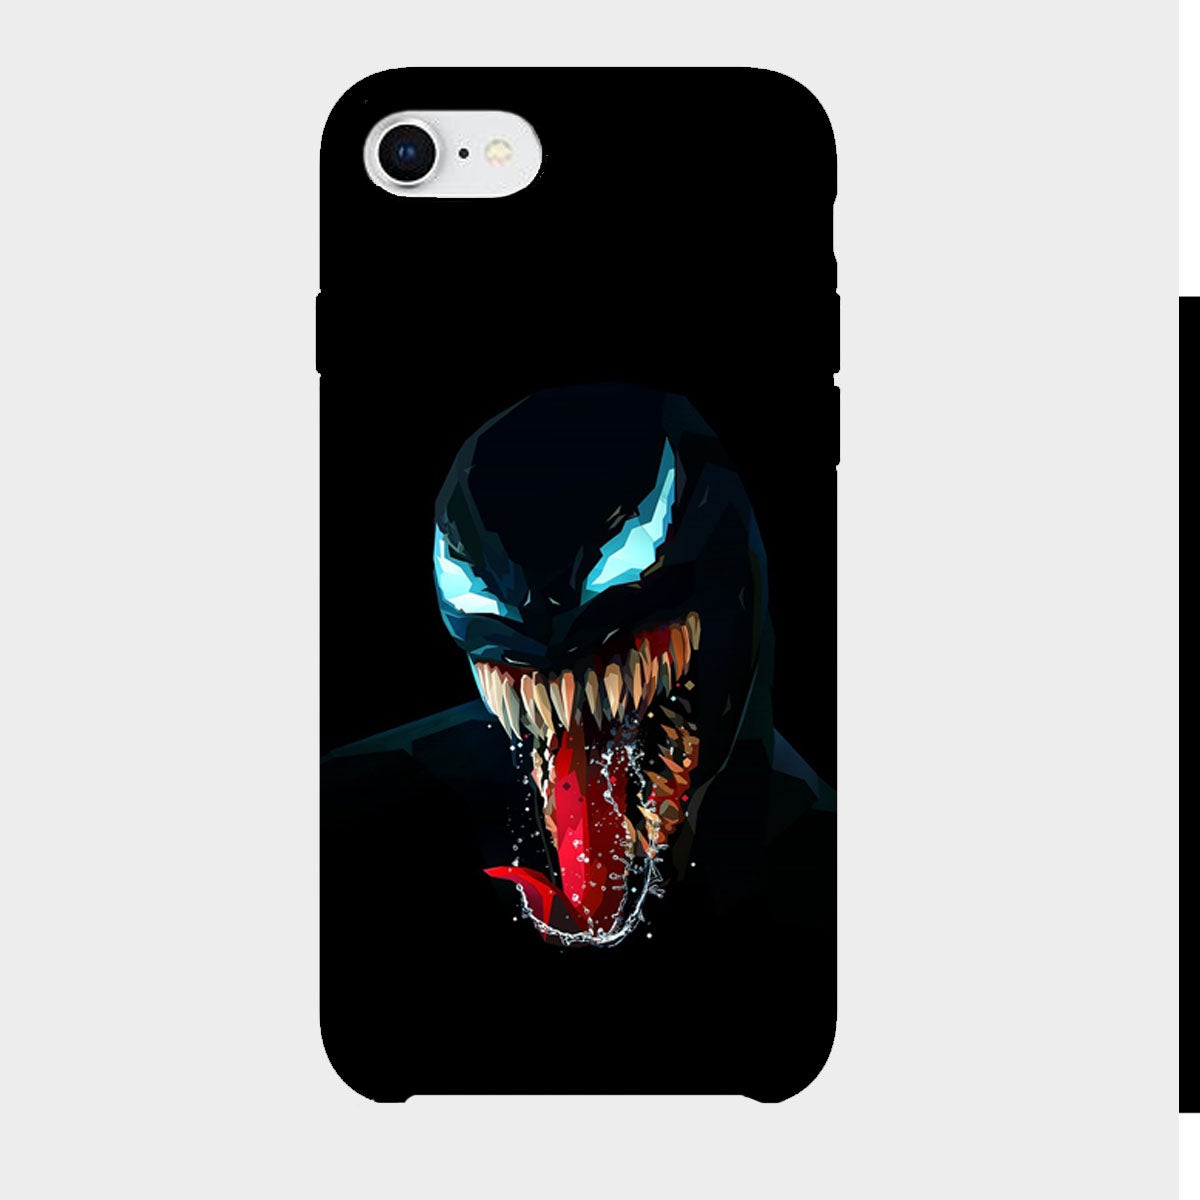 The Venom - Mobile Phone Cover - Hard Case